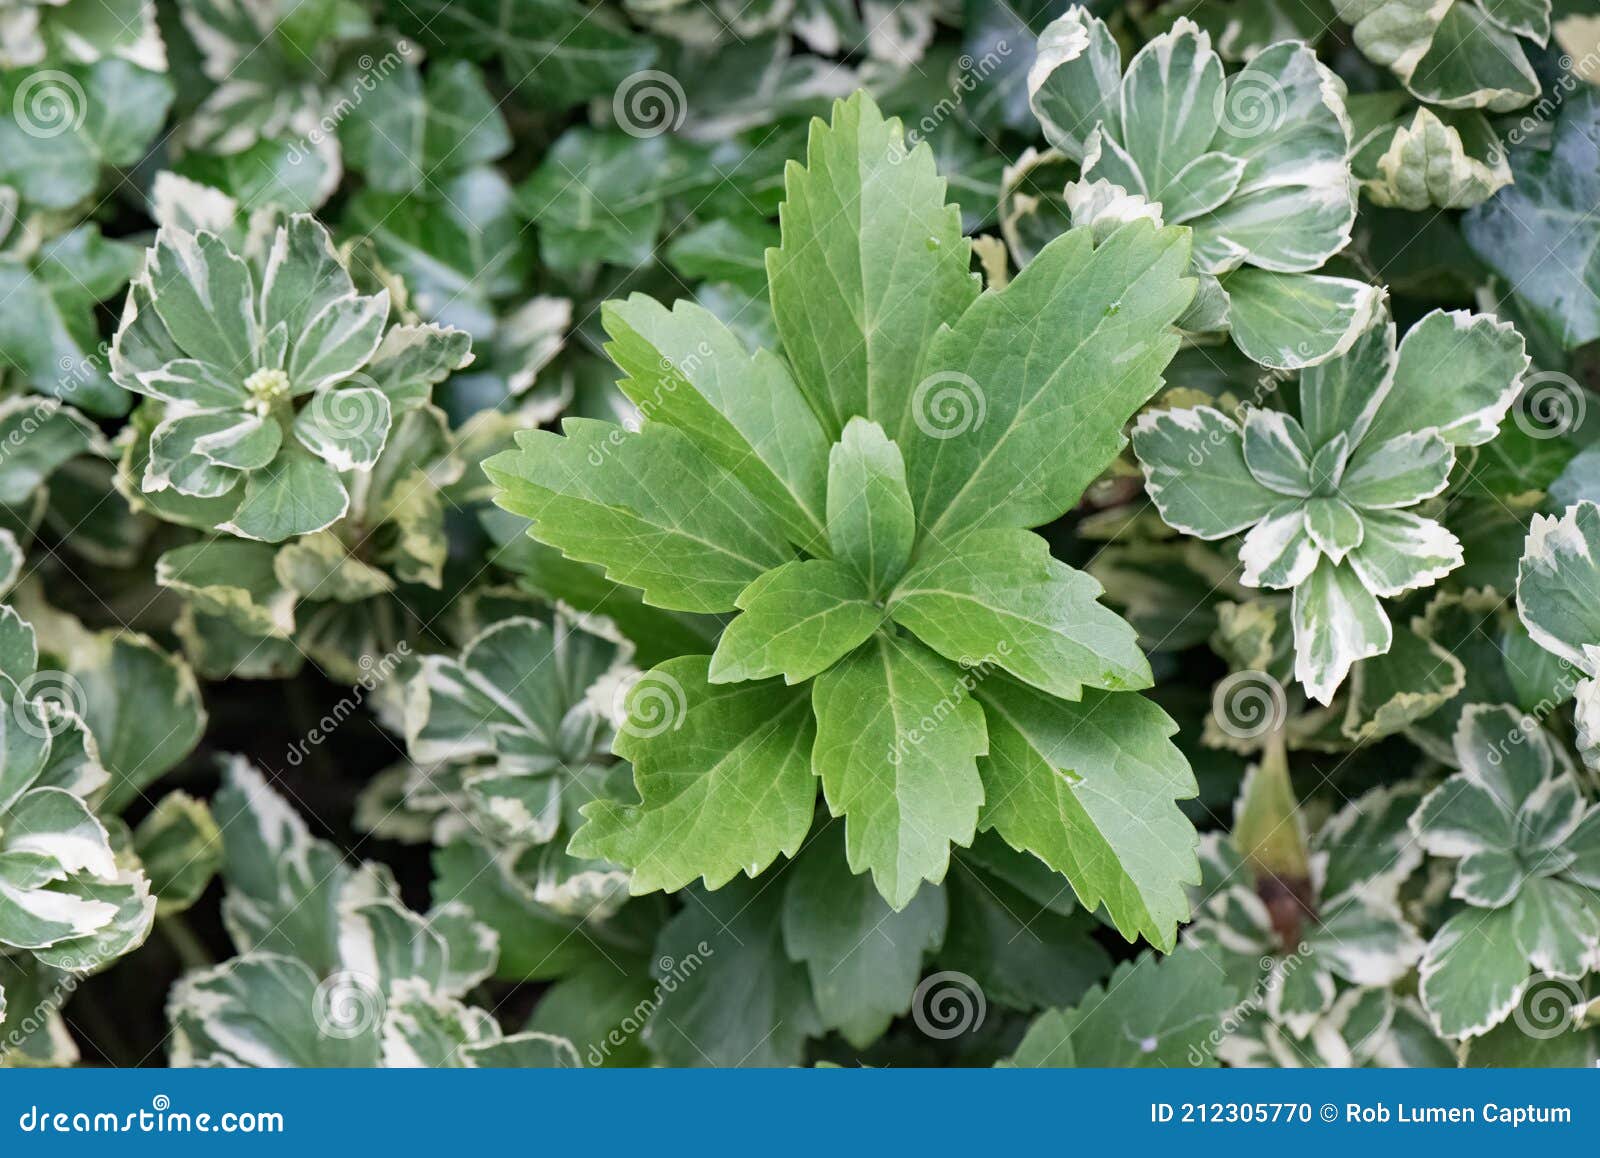 japanese pachysandra terminalis variegata, leaf wreath